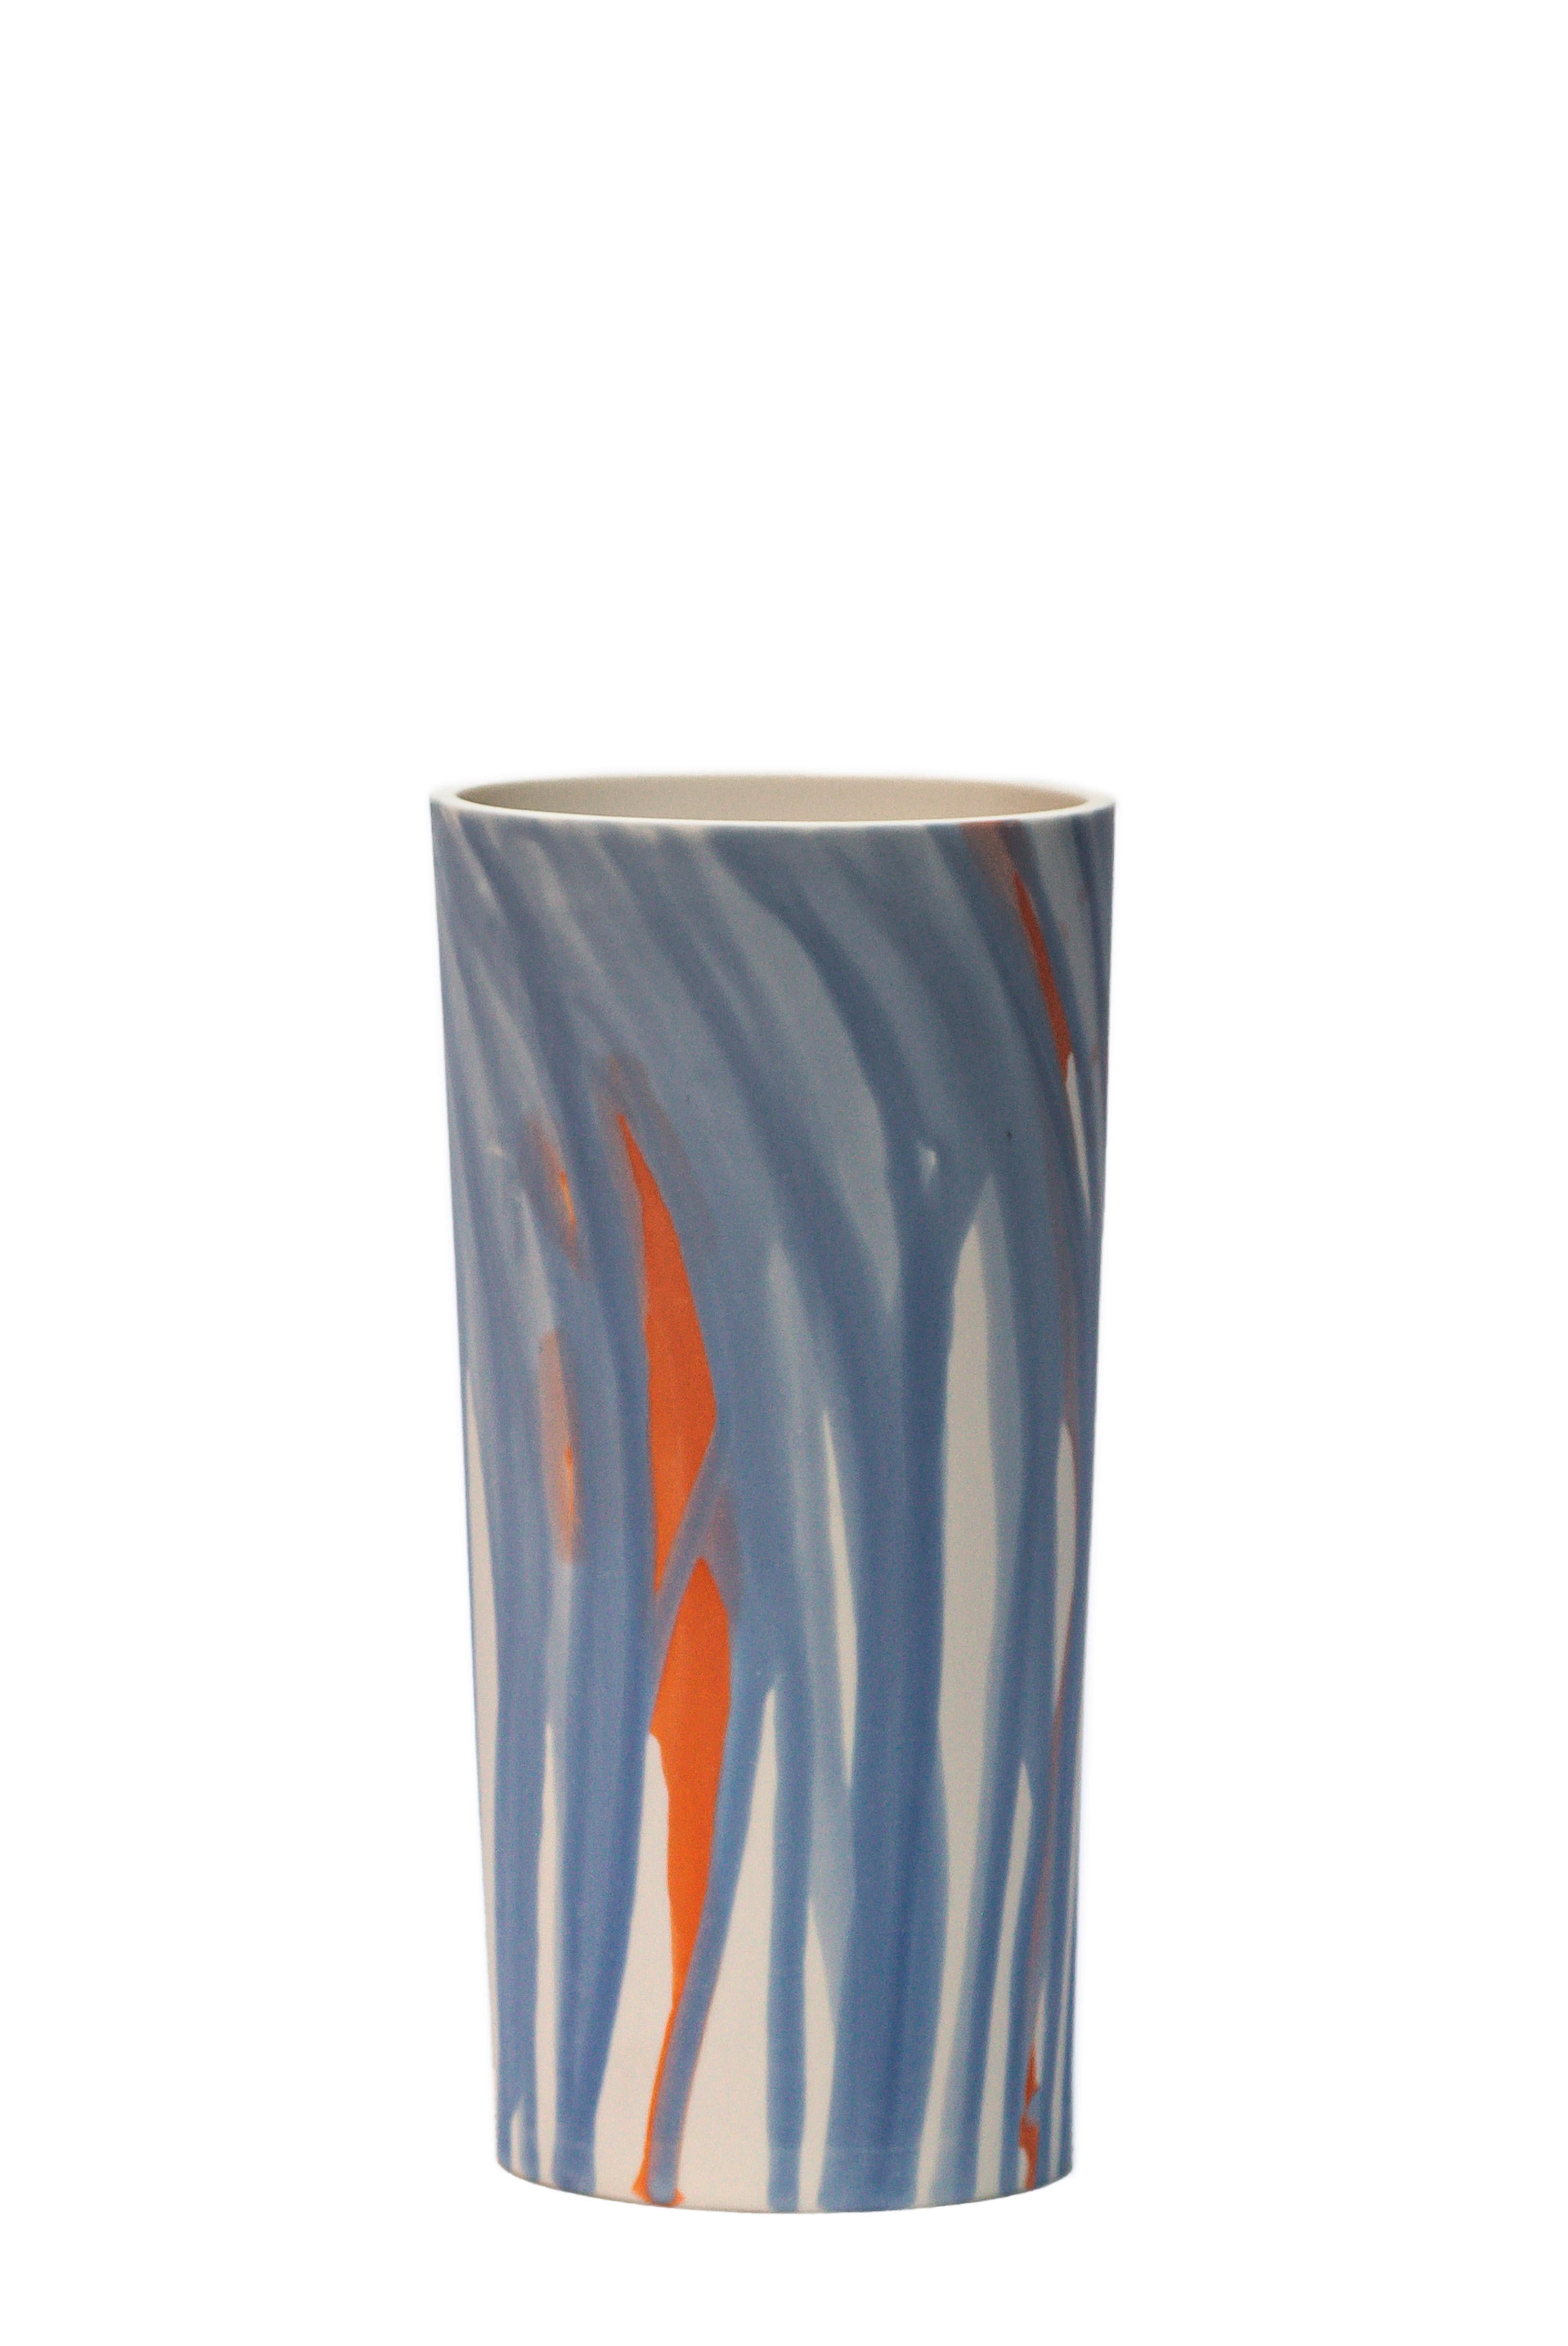 British Salmon and Sky Porcelain Vase Unique Parianware Contemporary 21st Century UK For Sale